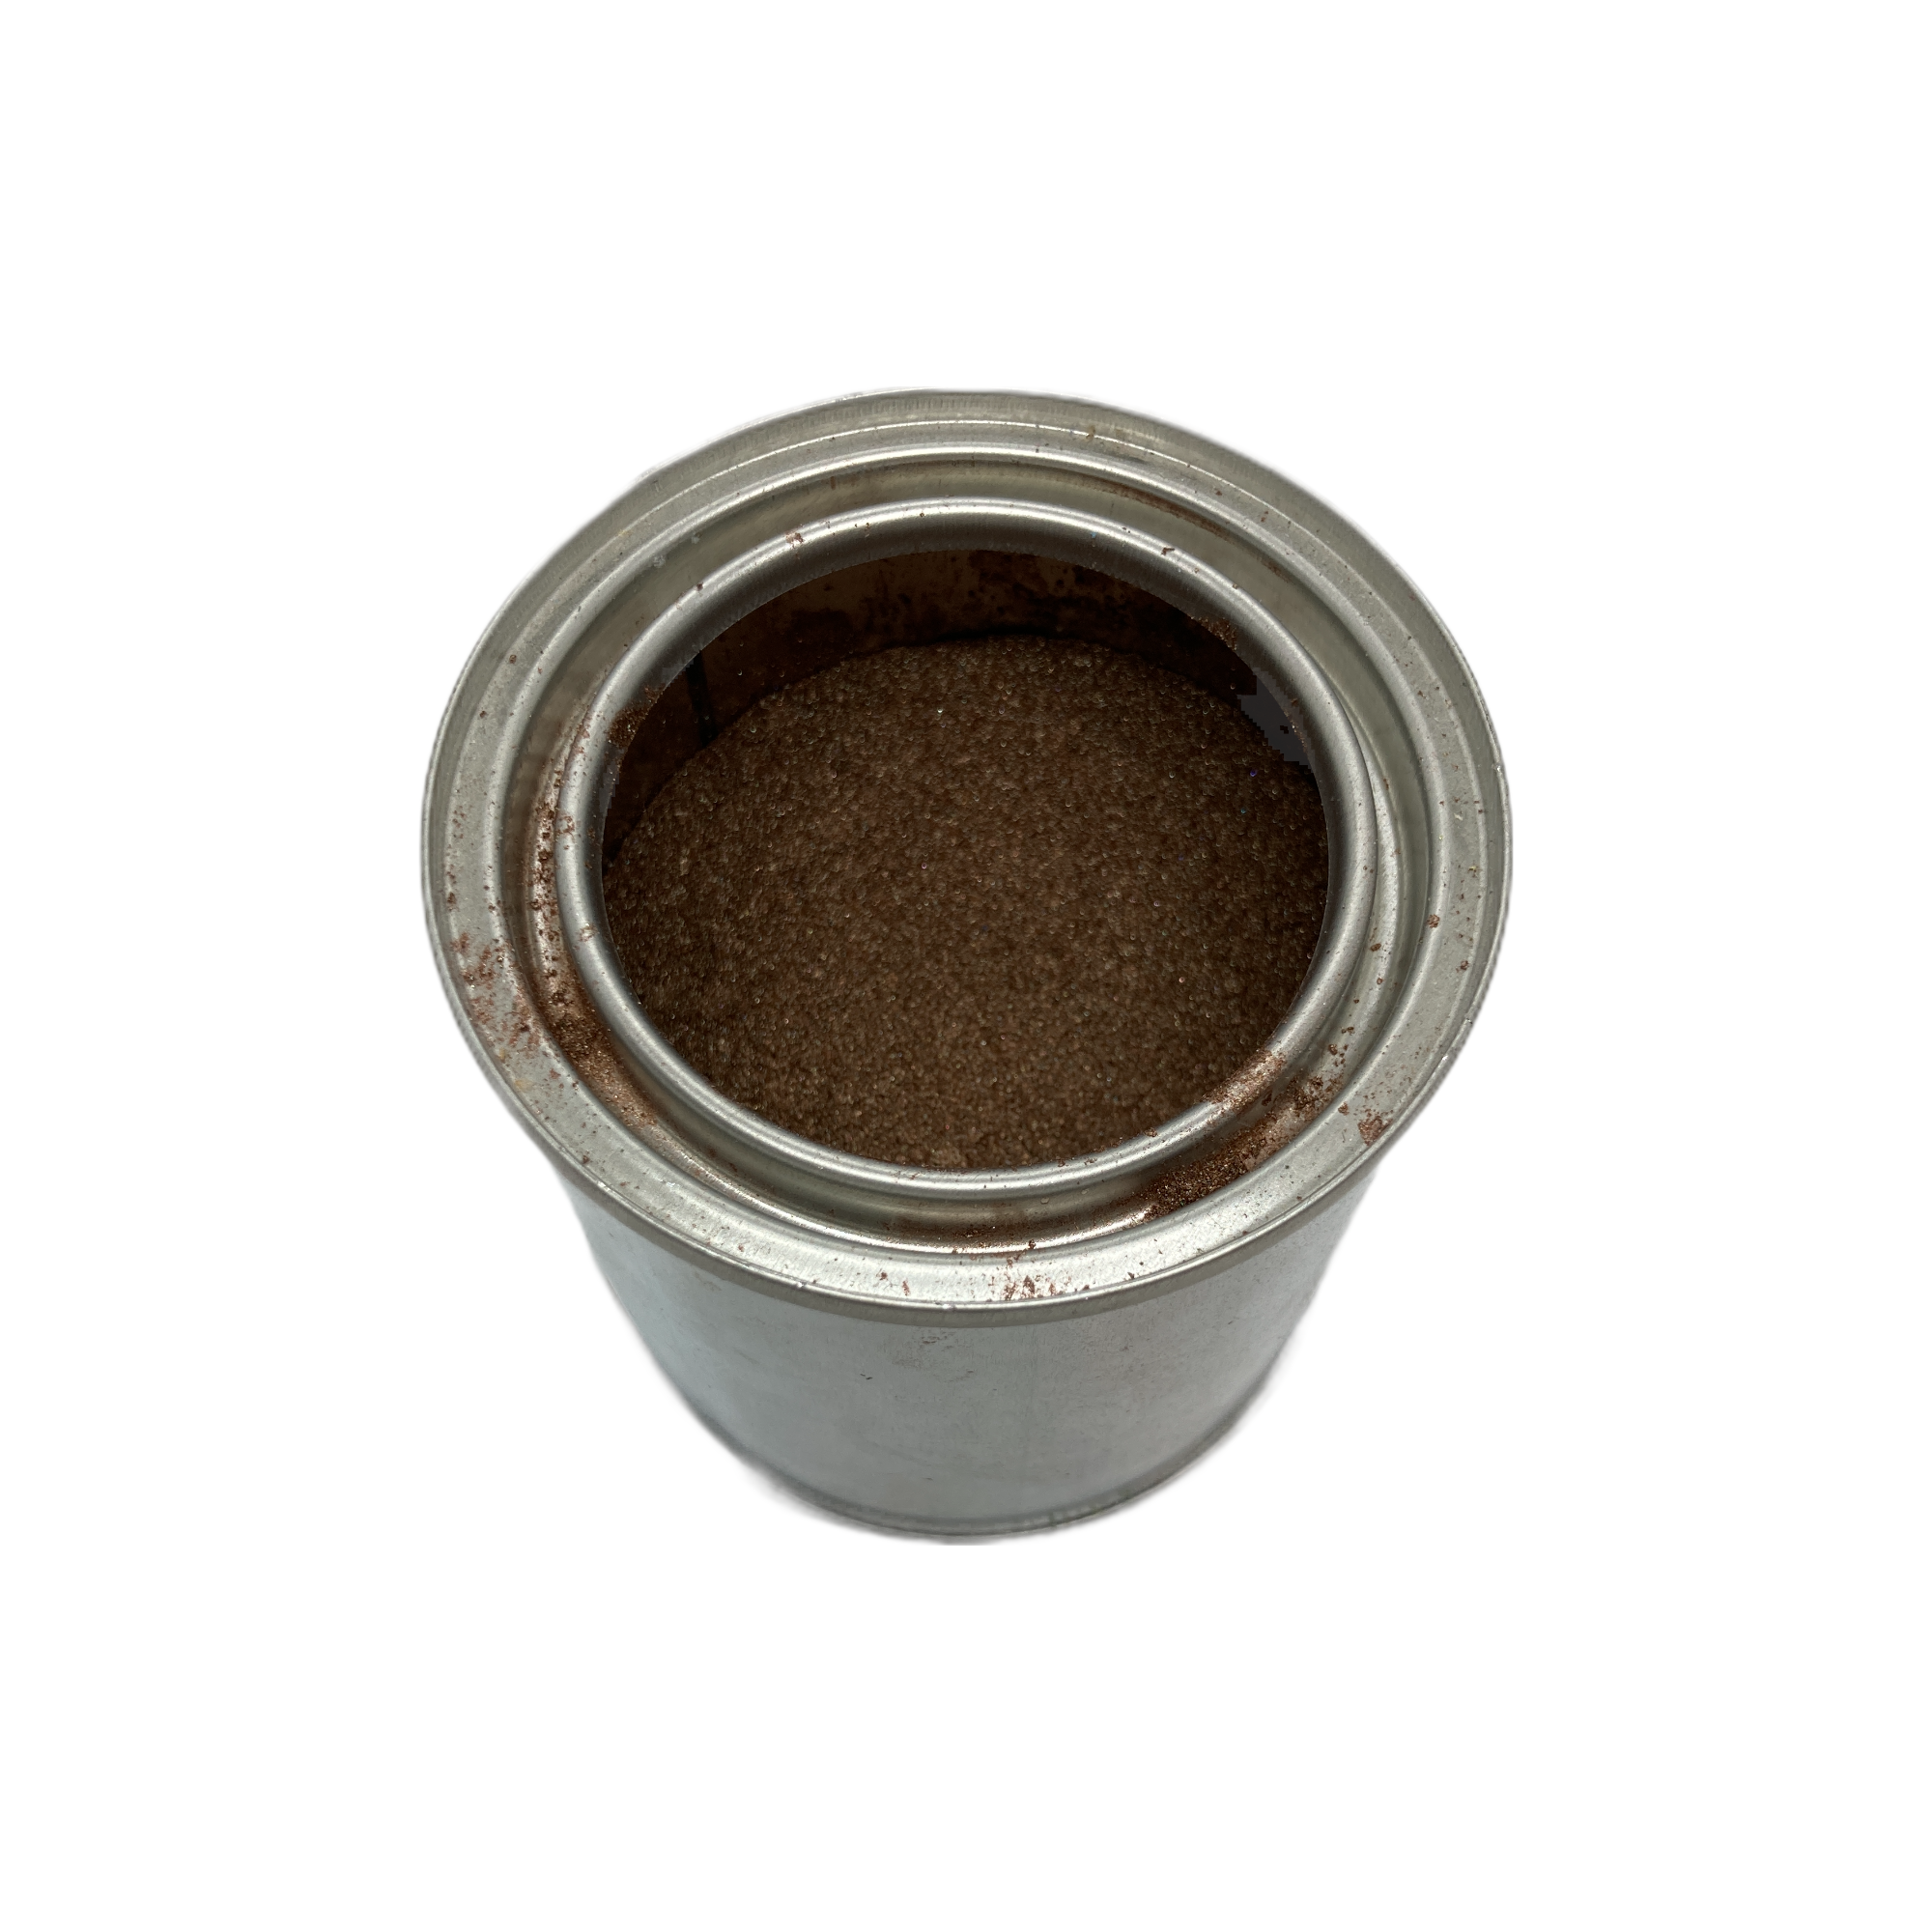 Mica Metallic Powder Pigment - Coffee